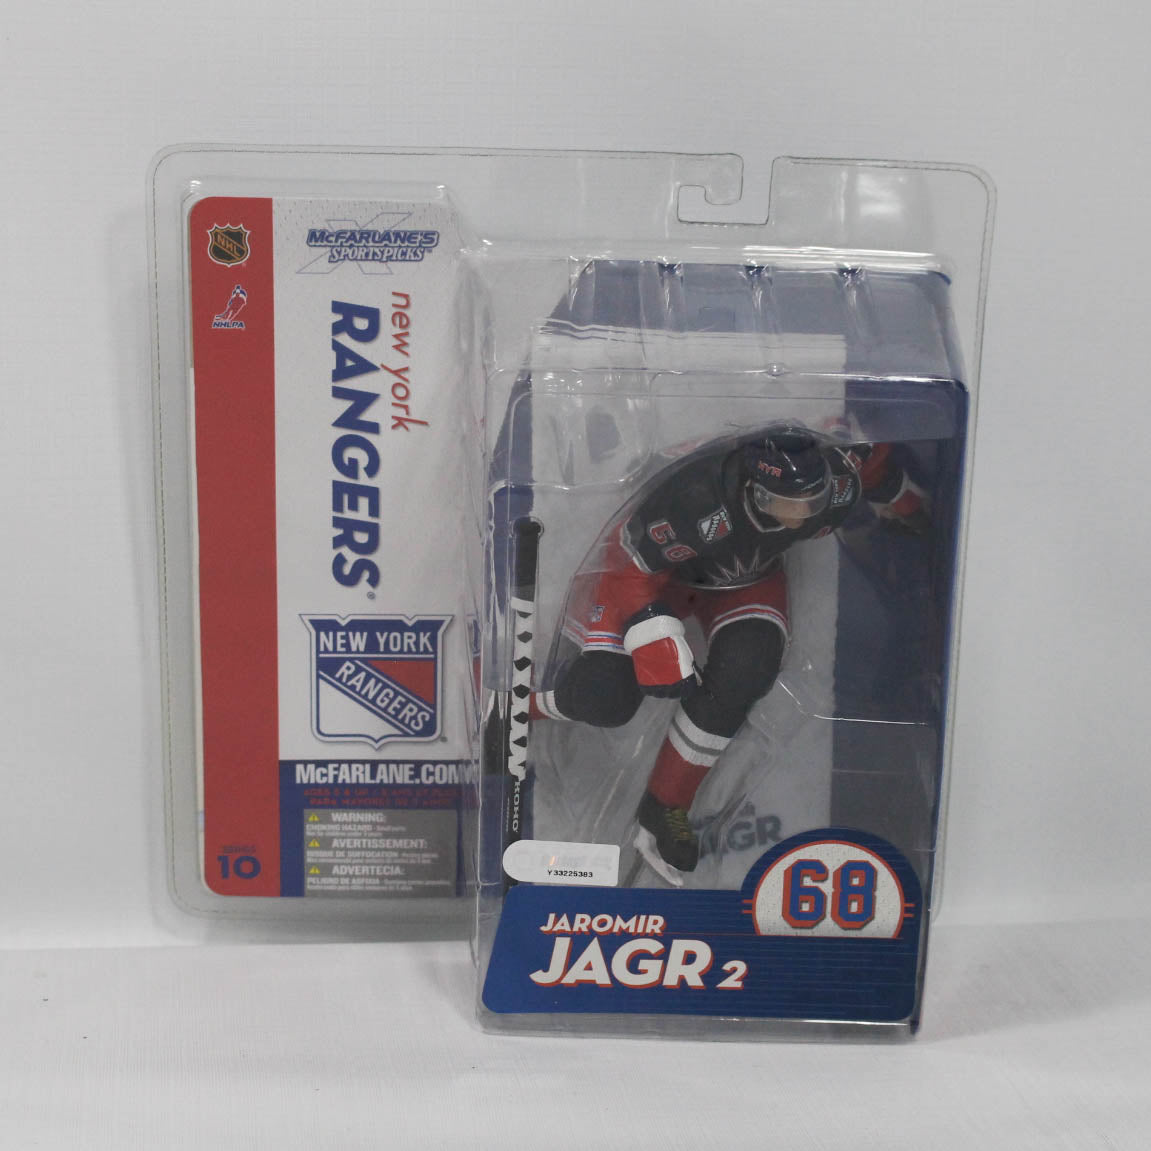 Rangers de New York Figurine  - Jaromir Jagr #68